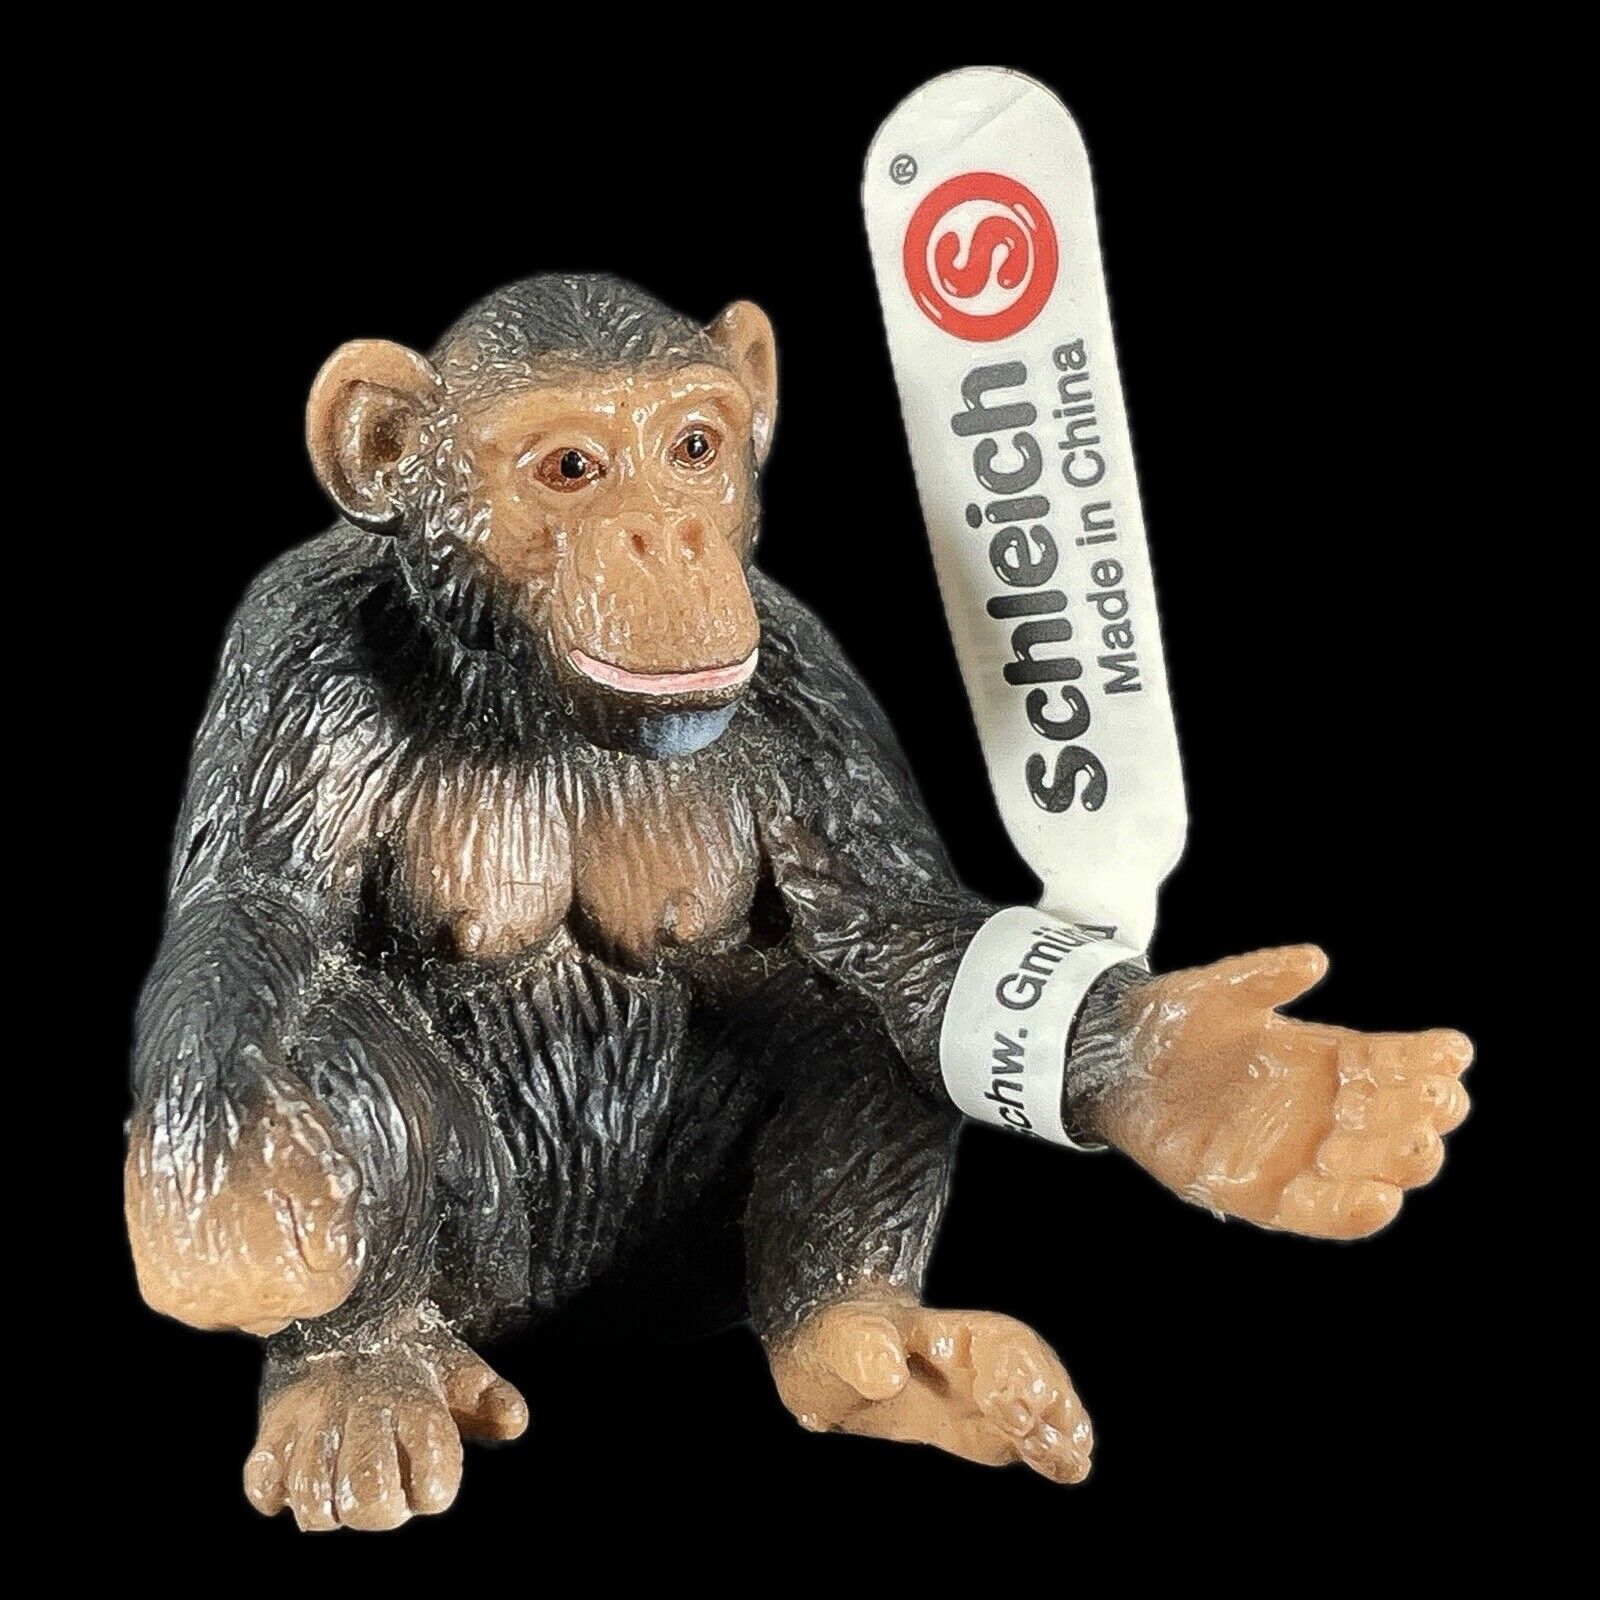 Schleich Chimpanzee Female Chimp Figure RETIRED Animal Figurine - NEW